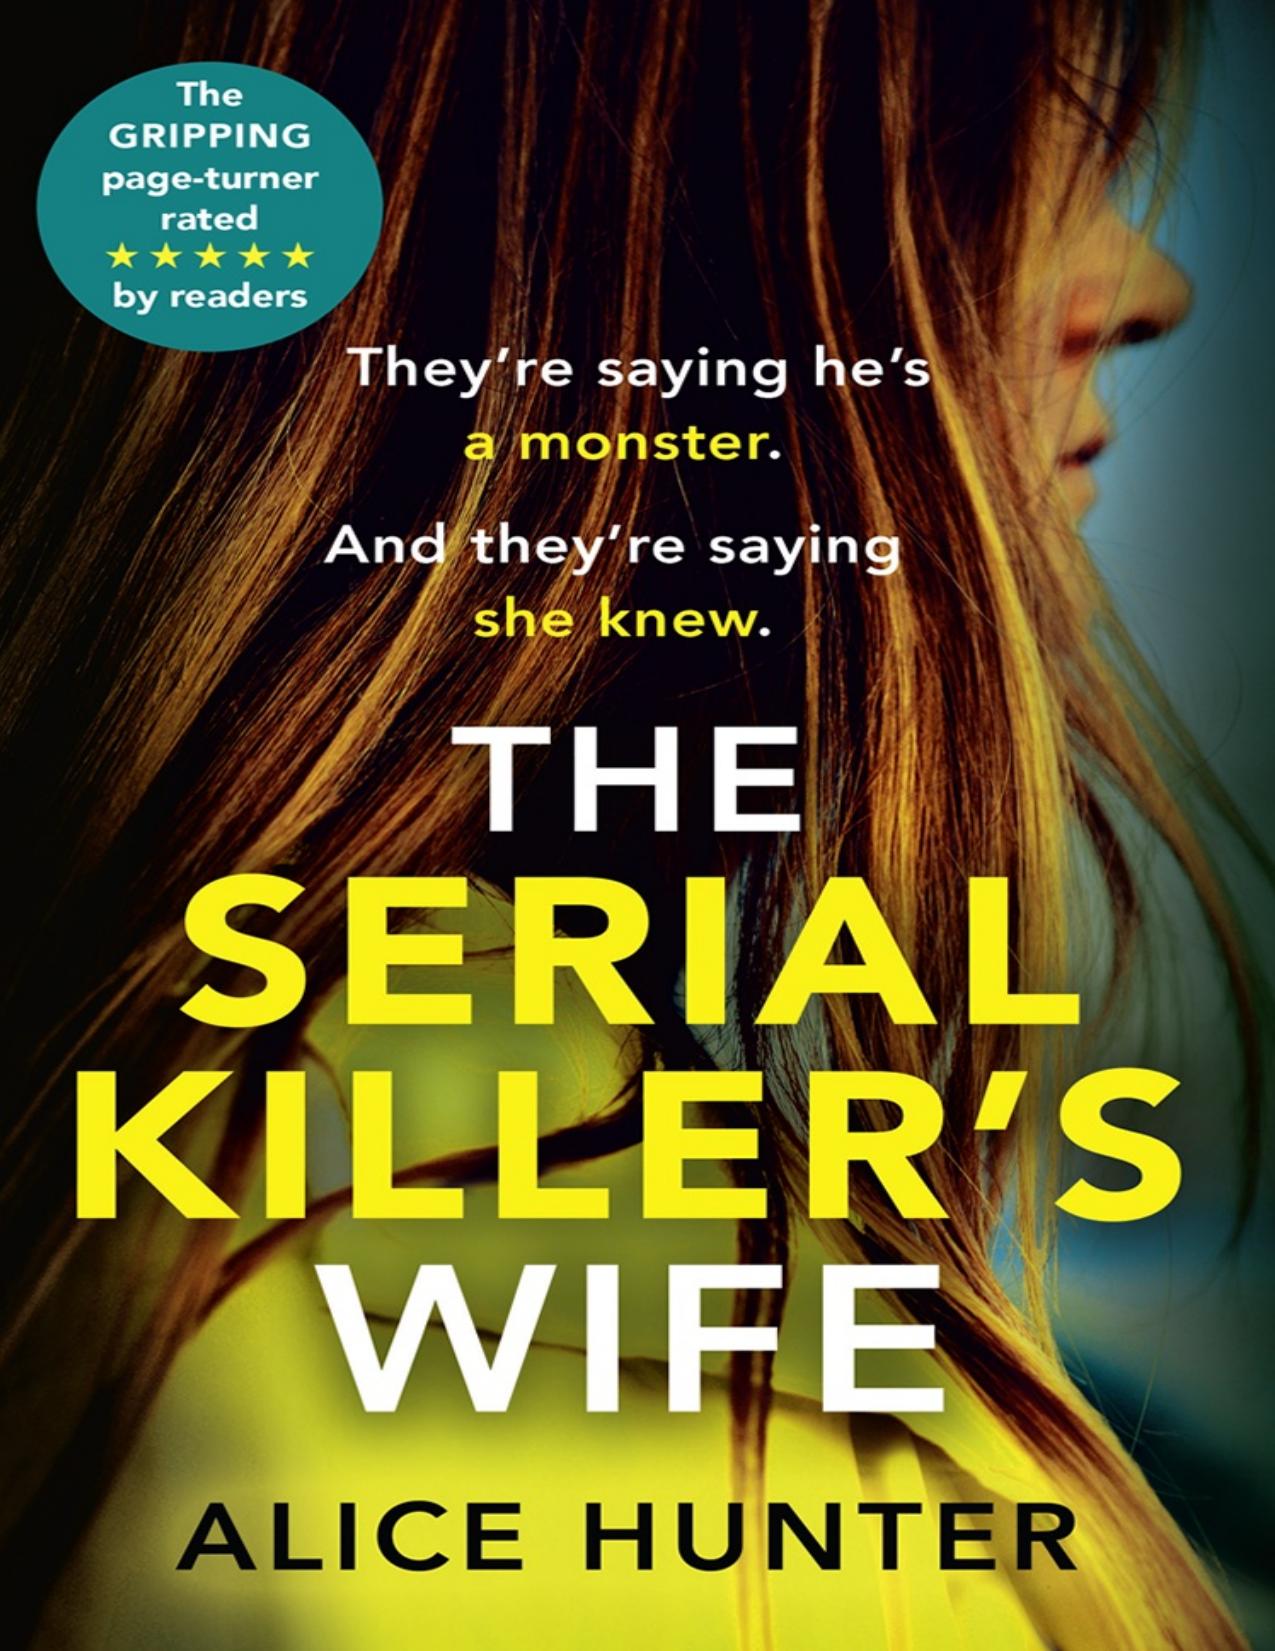 The Serial Killer’s Wife